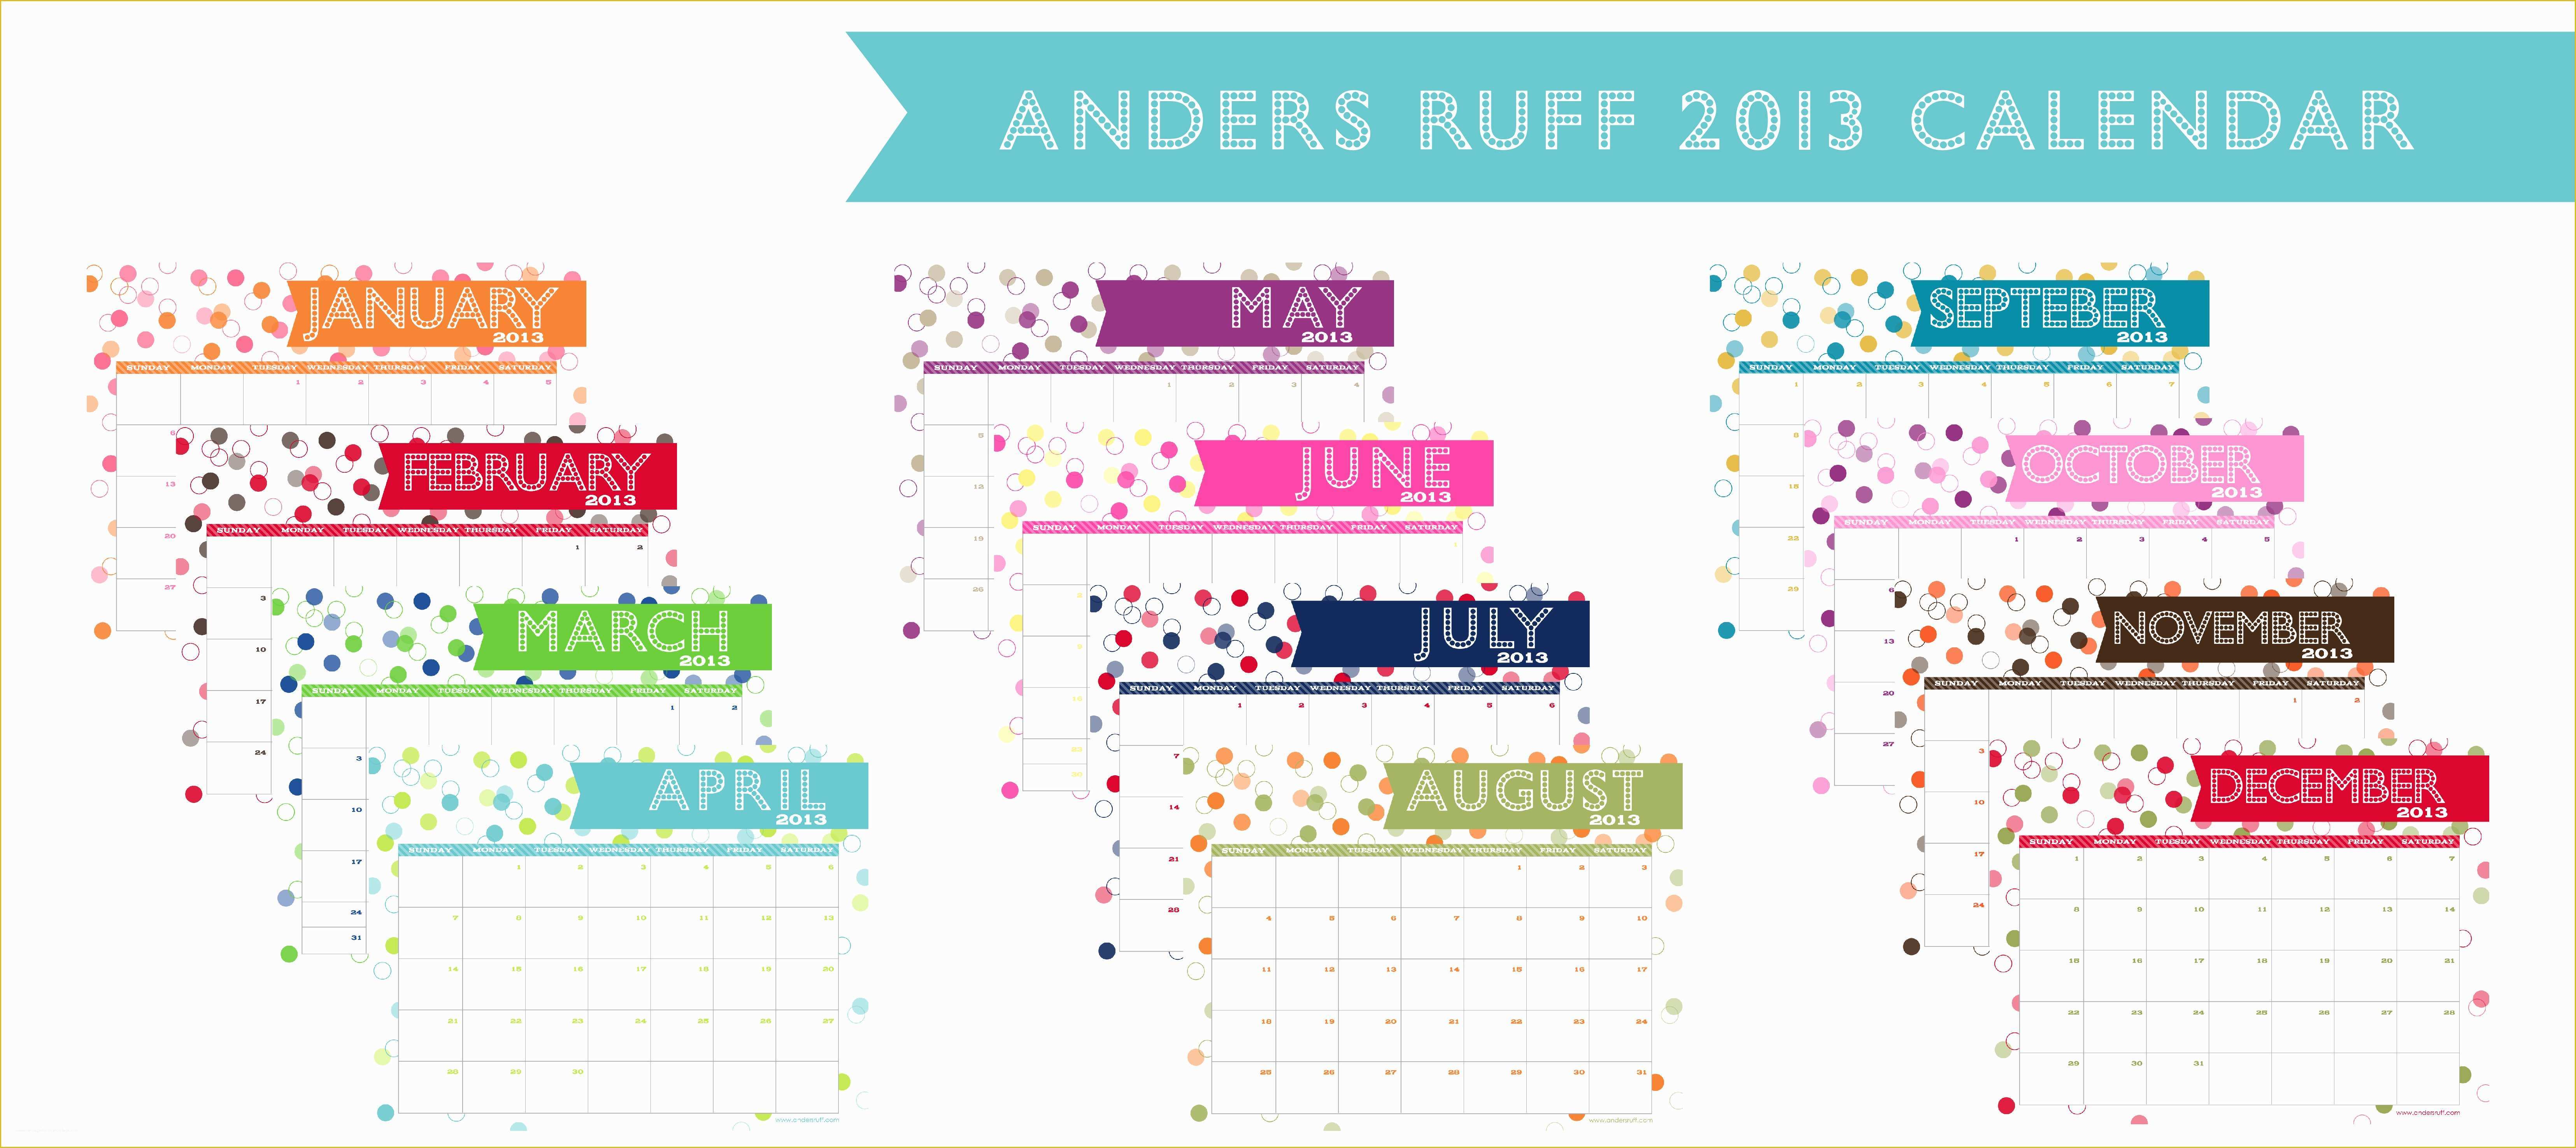 Free Customizable Calendar Template Of Ruff Draft Free Printable 2013 Calendar anders Ruff